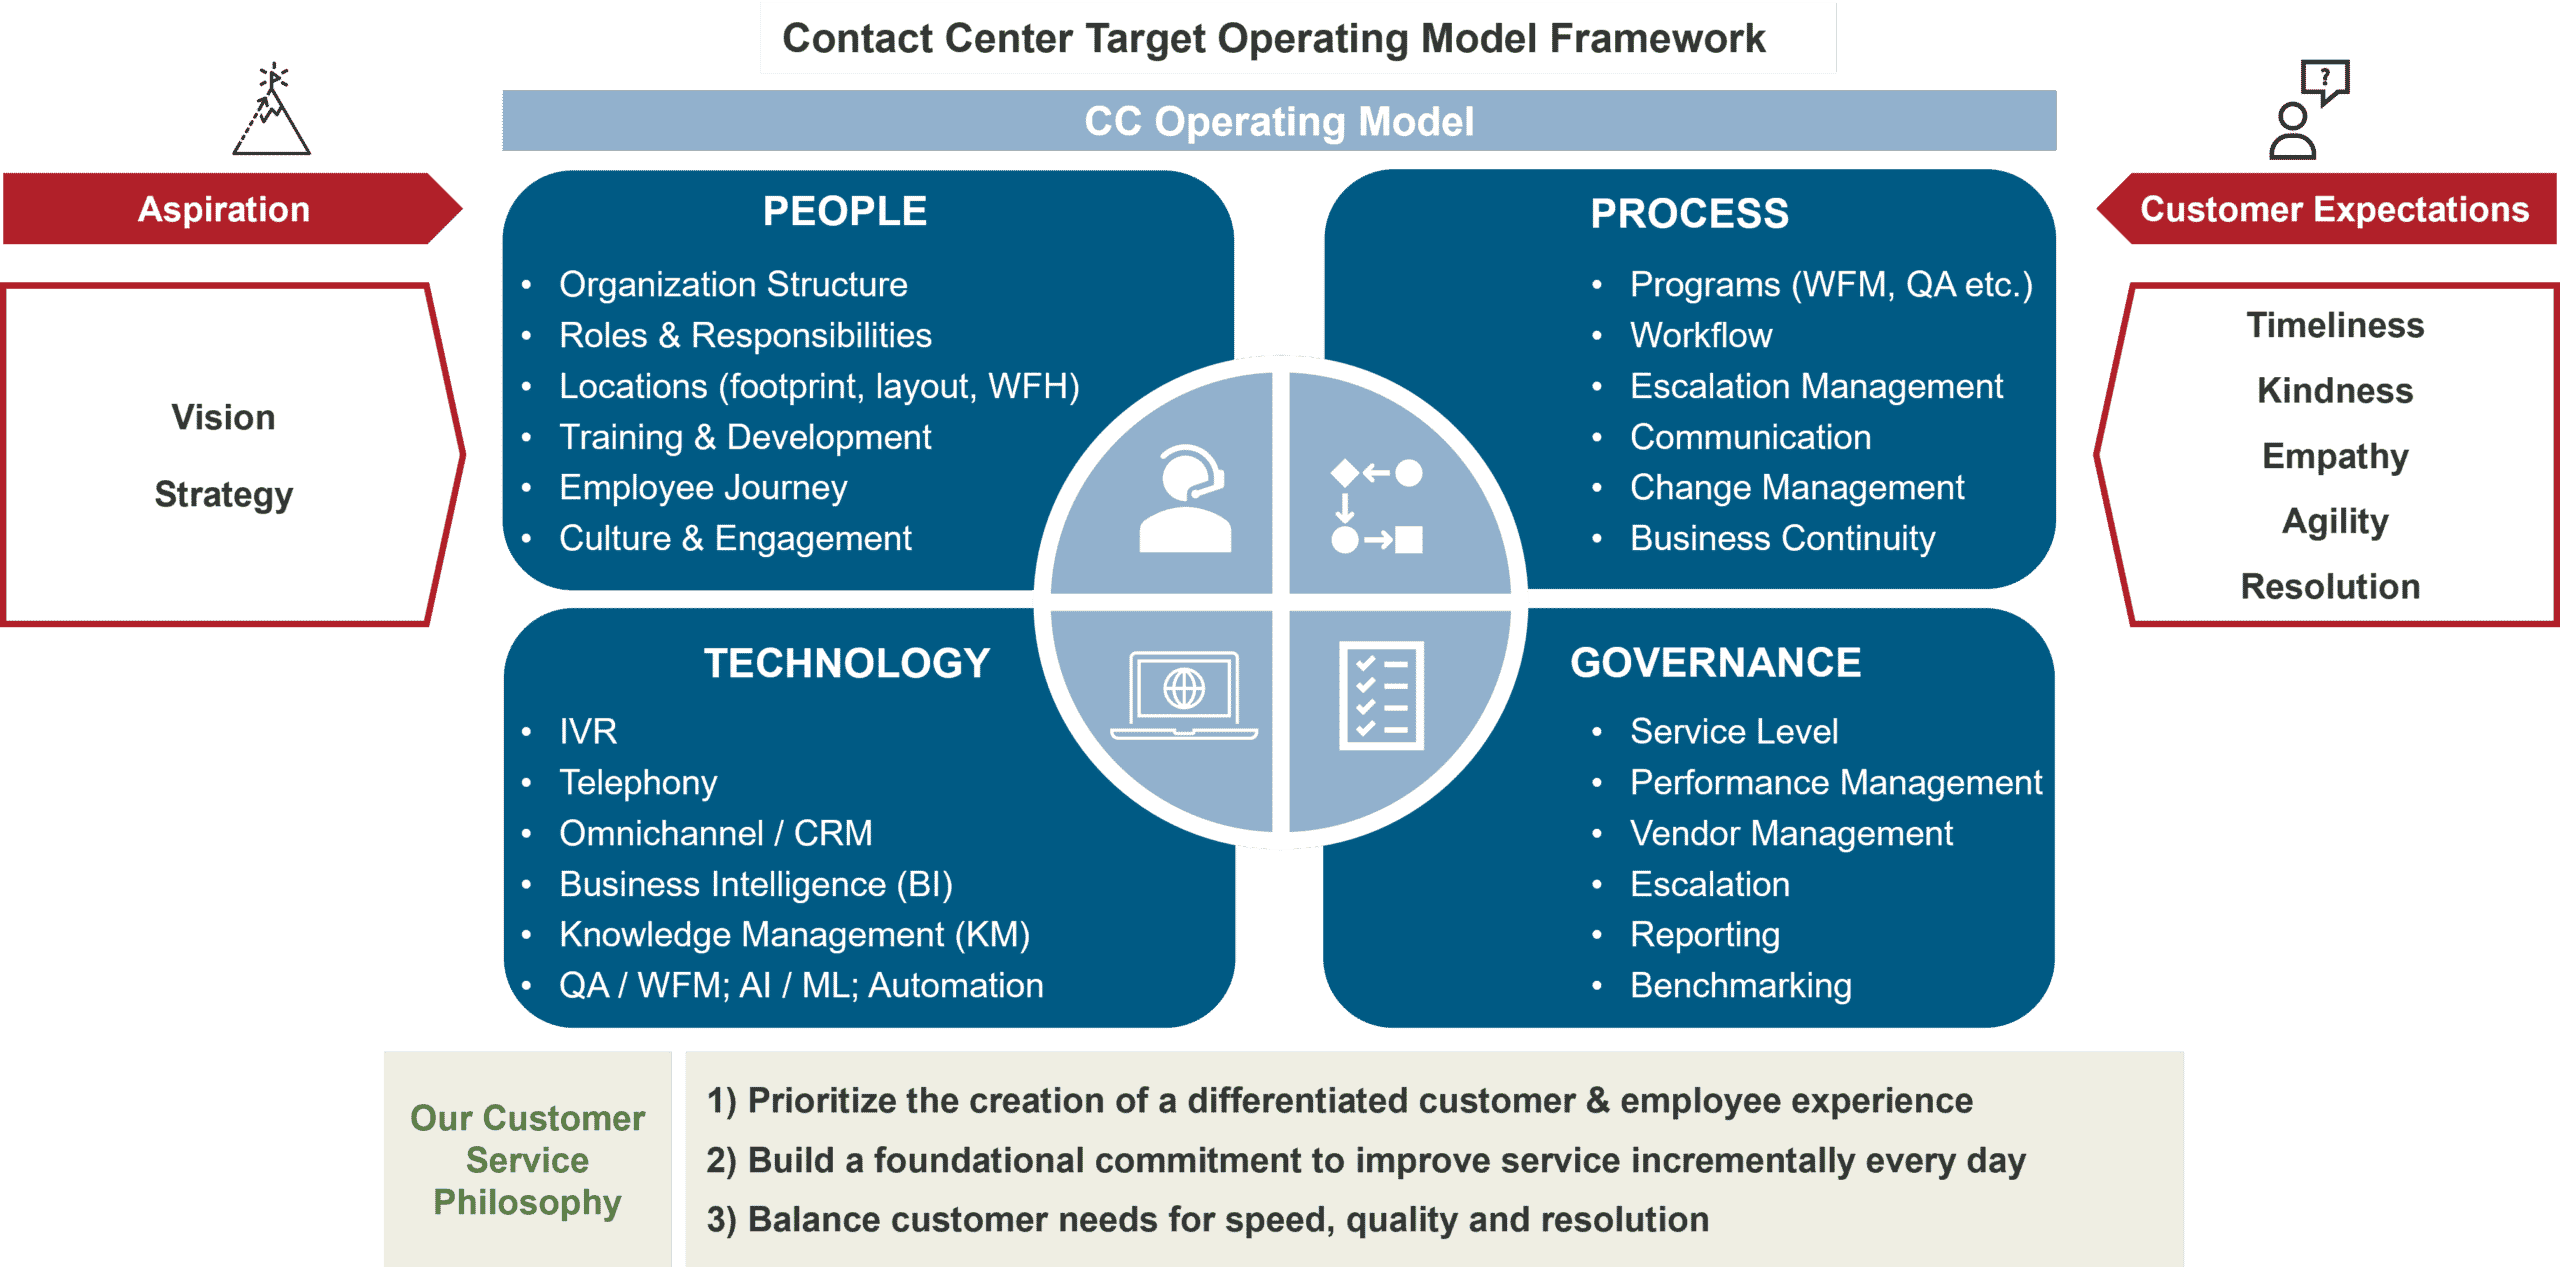 Burnie Group's Contact Center Target Operating Model Framework